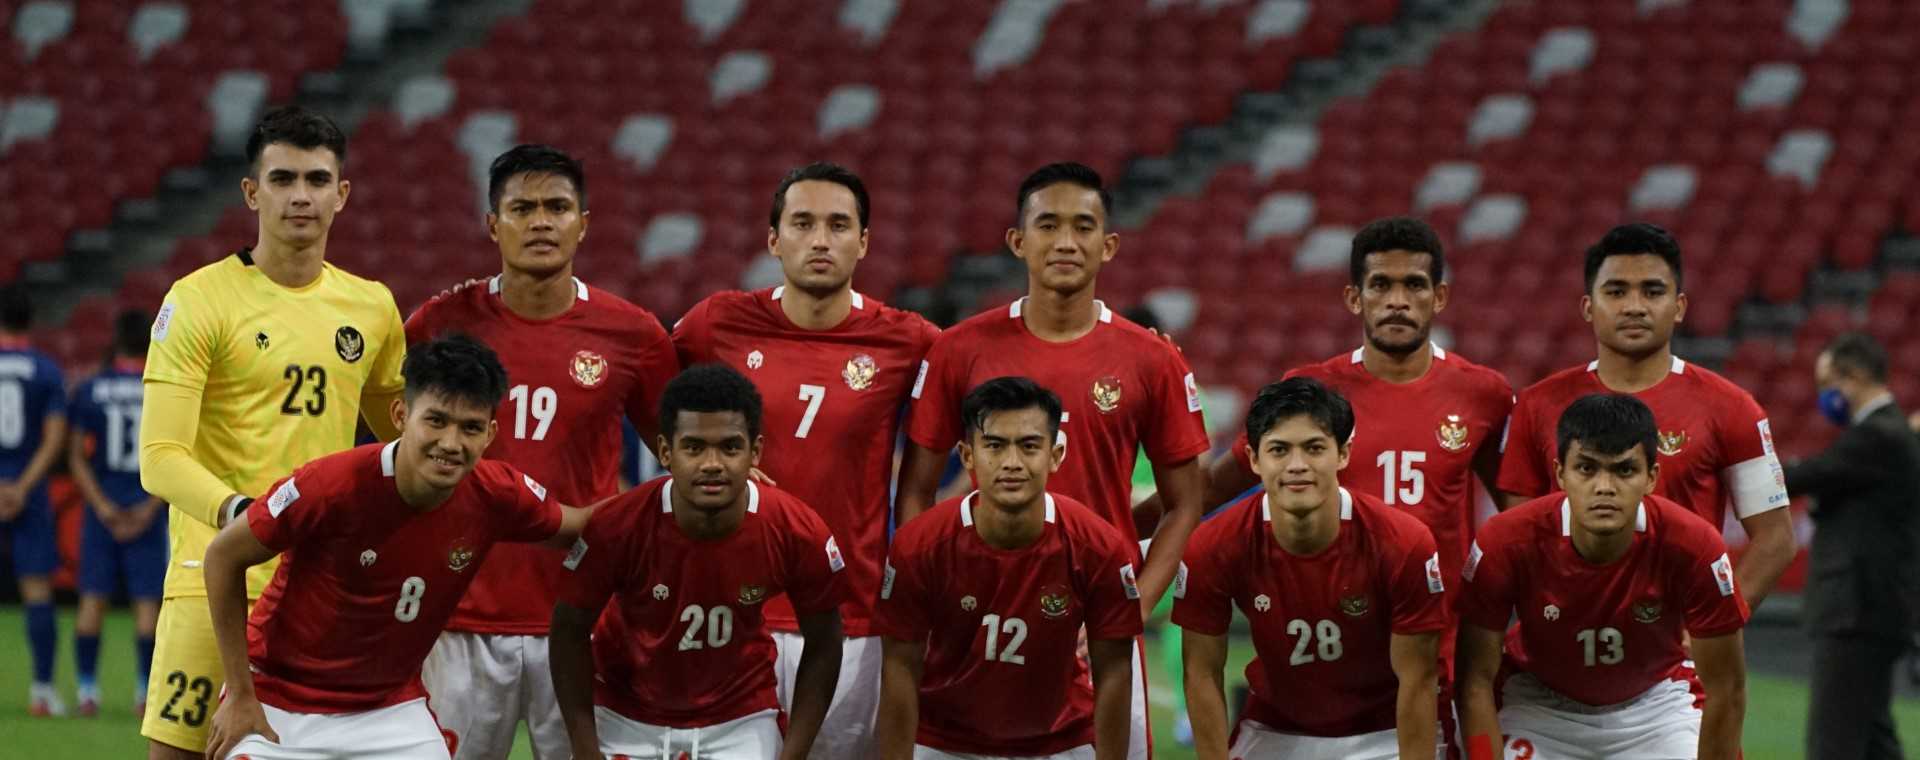 Pesepak bola Timnas Indonesia berpose di hadapan fotografer sebelum bertanding melawan Timnas Singapura dalam pertandingan Semi Final Leg 2 Piala AFF 2020 di National Stadium, Singapura, Sabtu (25/12/2021). Indonesia menang 4-2 pada pertandingan ini sehingga mengantarkan Laskar Garuda bertemu Thailand. - Antara / Humas PSSI.